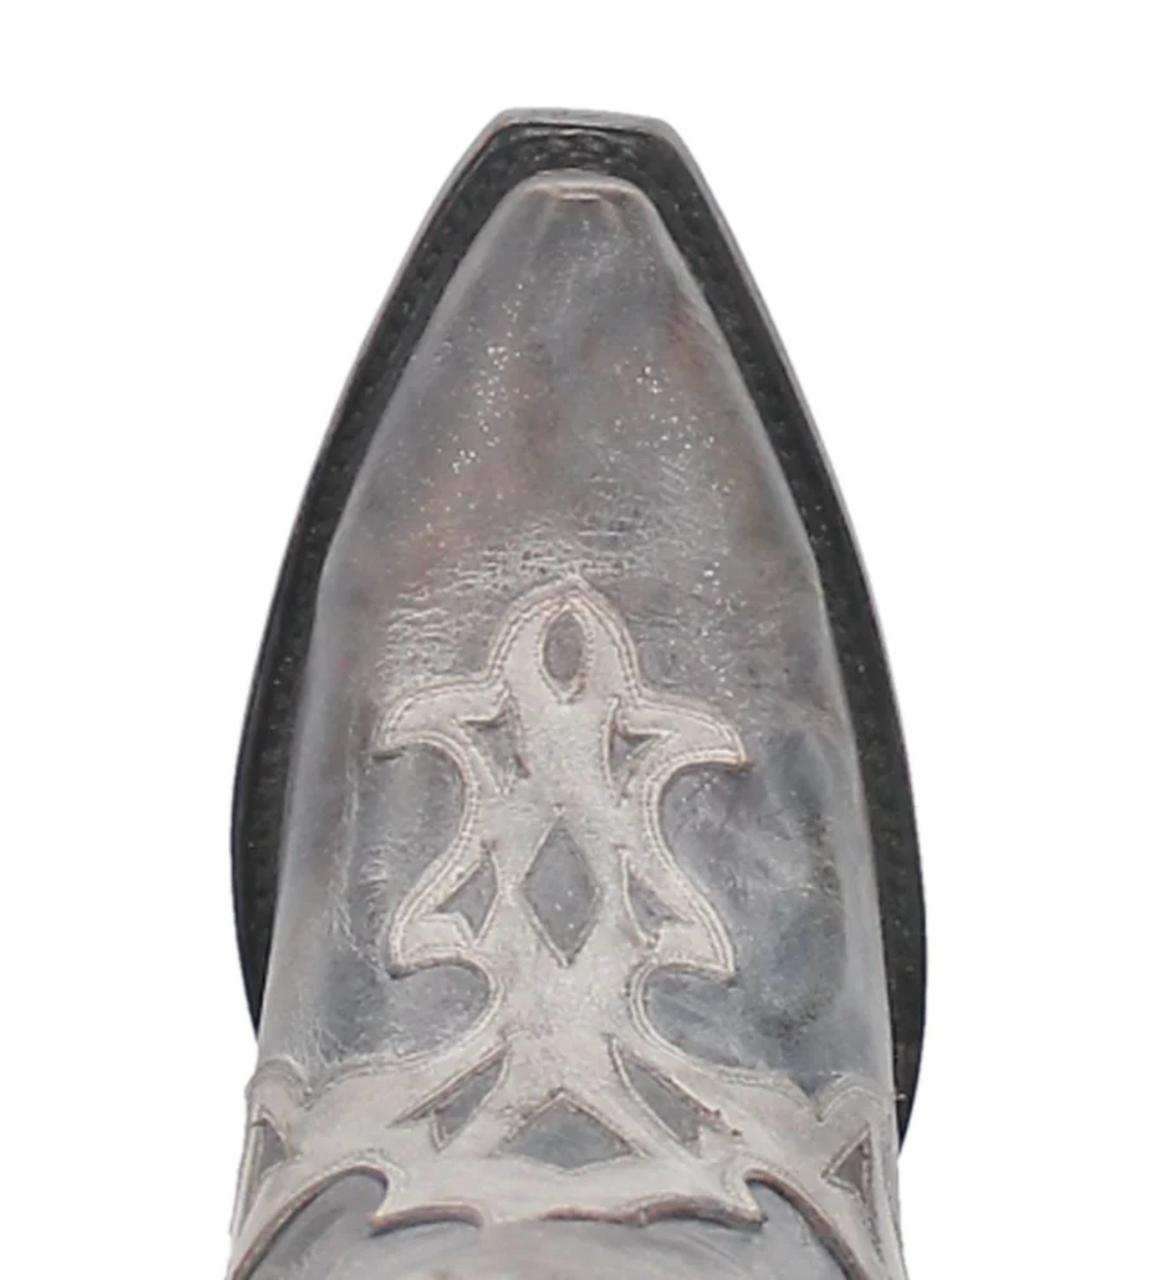 Dan Post Ladies 13" Ameya Grey Metallic With Fringe Western Boots - OLD FORT WESTERN